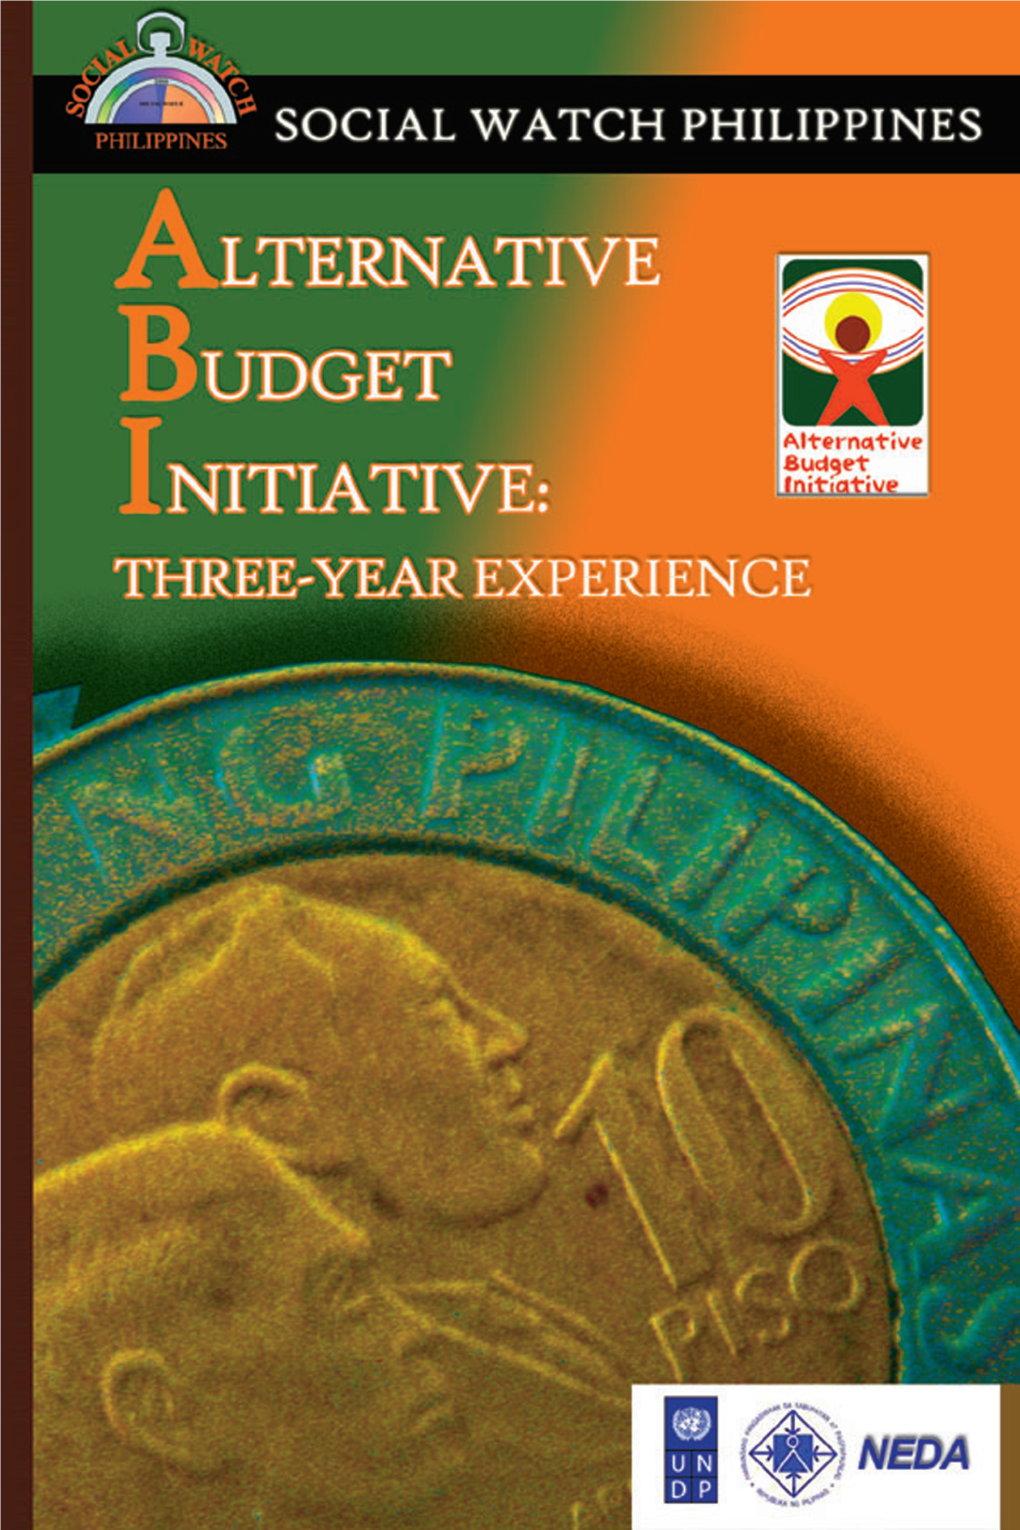 Alternative Budget Initiative Three-Year Experience 123456789012345678901234567890121234567890123456789